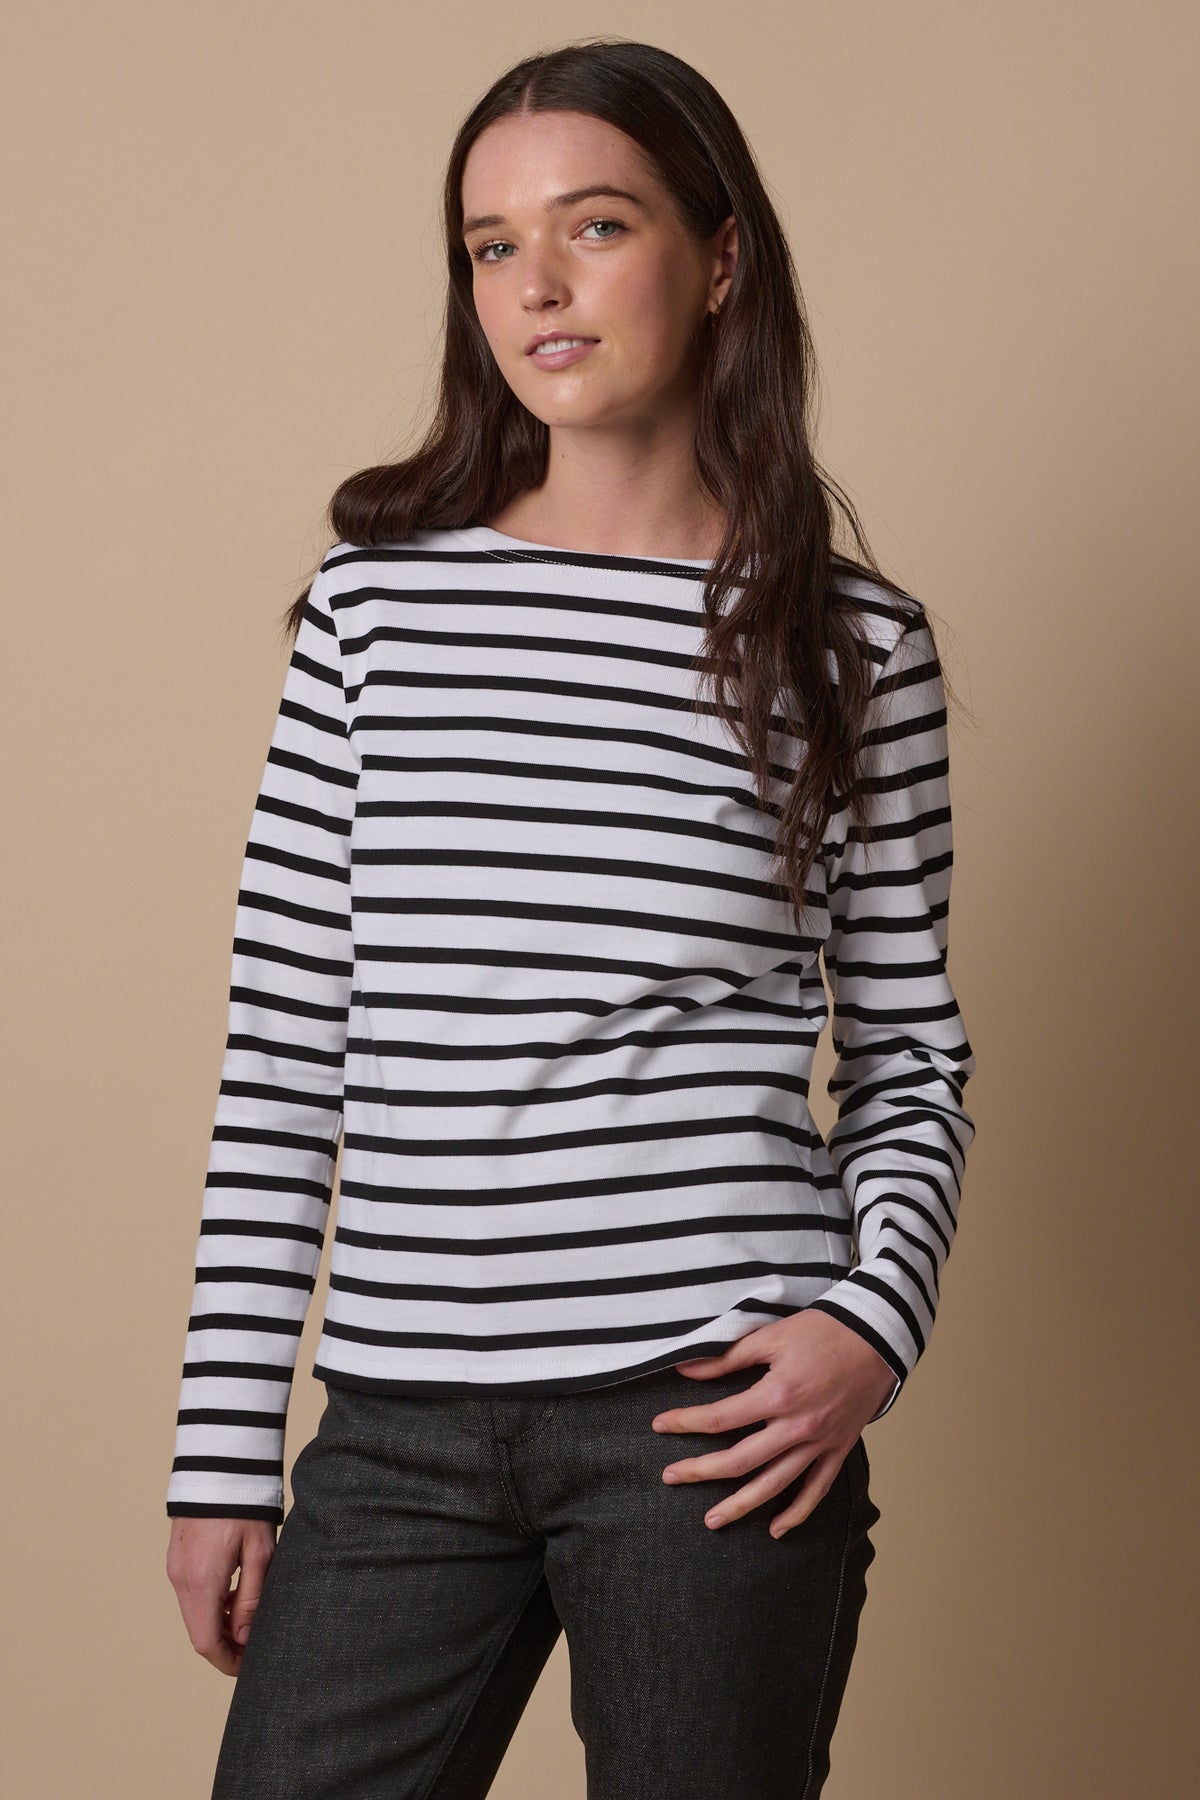 
            Thigh up image of female wearing long sleeve white and black Breton